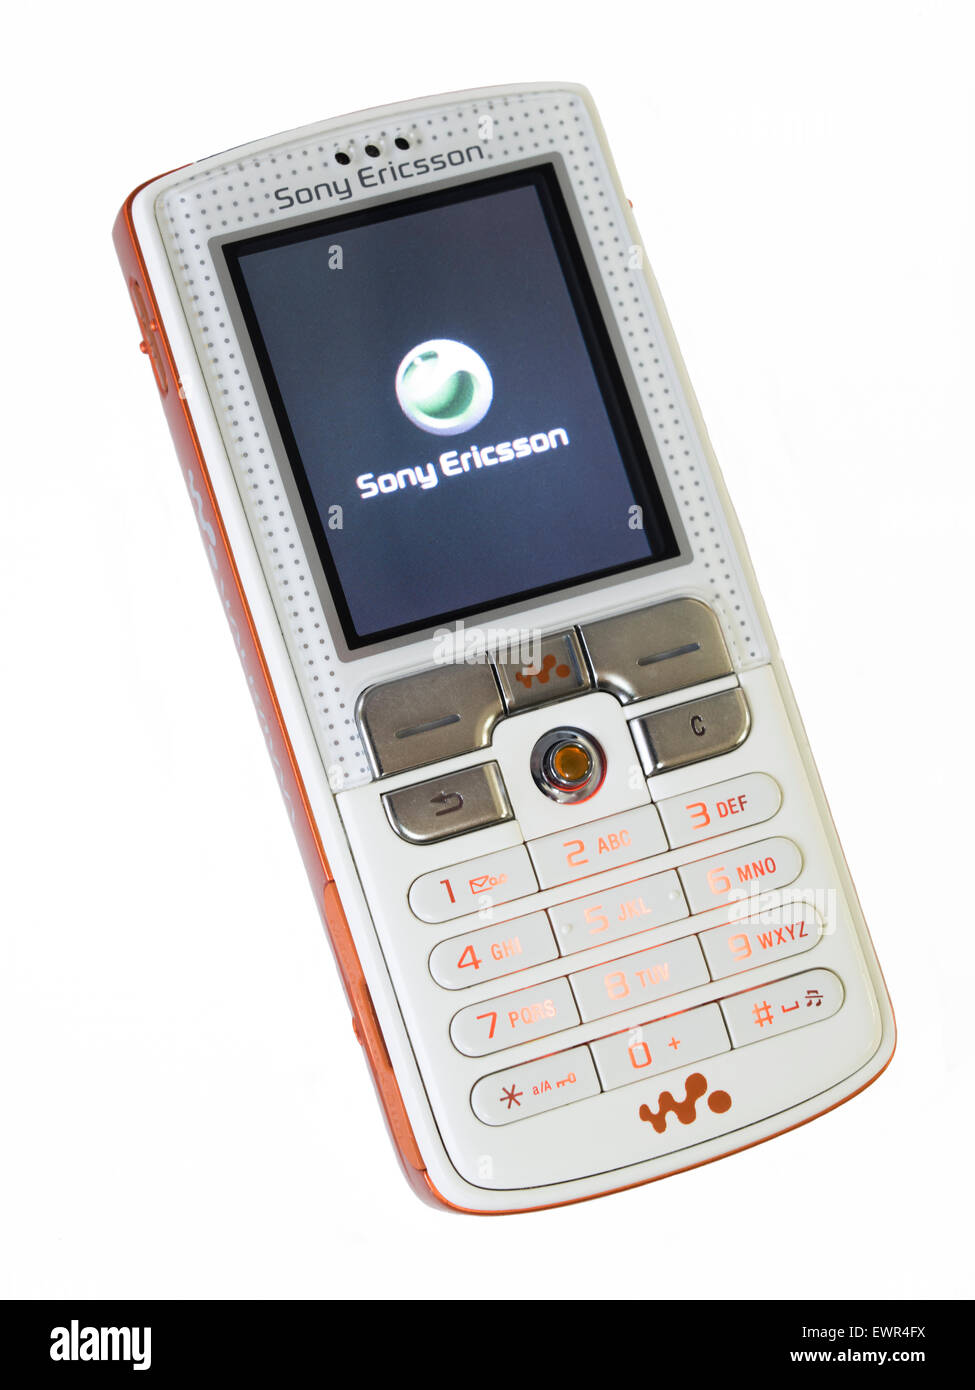 Sony Ericsson W800 Walkman mobile phone, released in 2005 Stock Photo